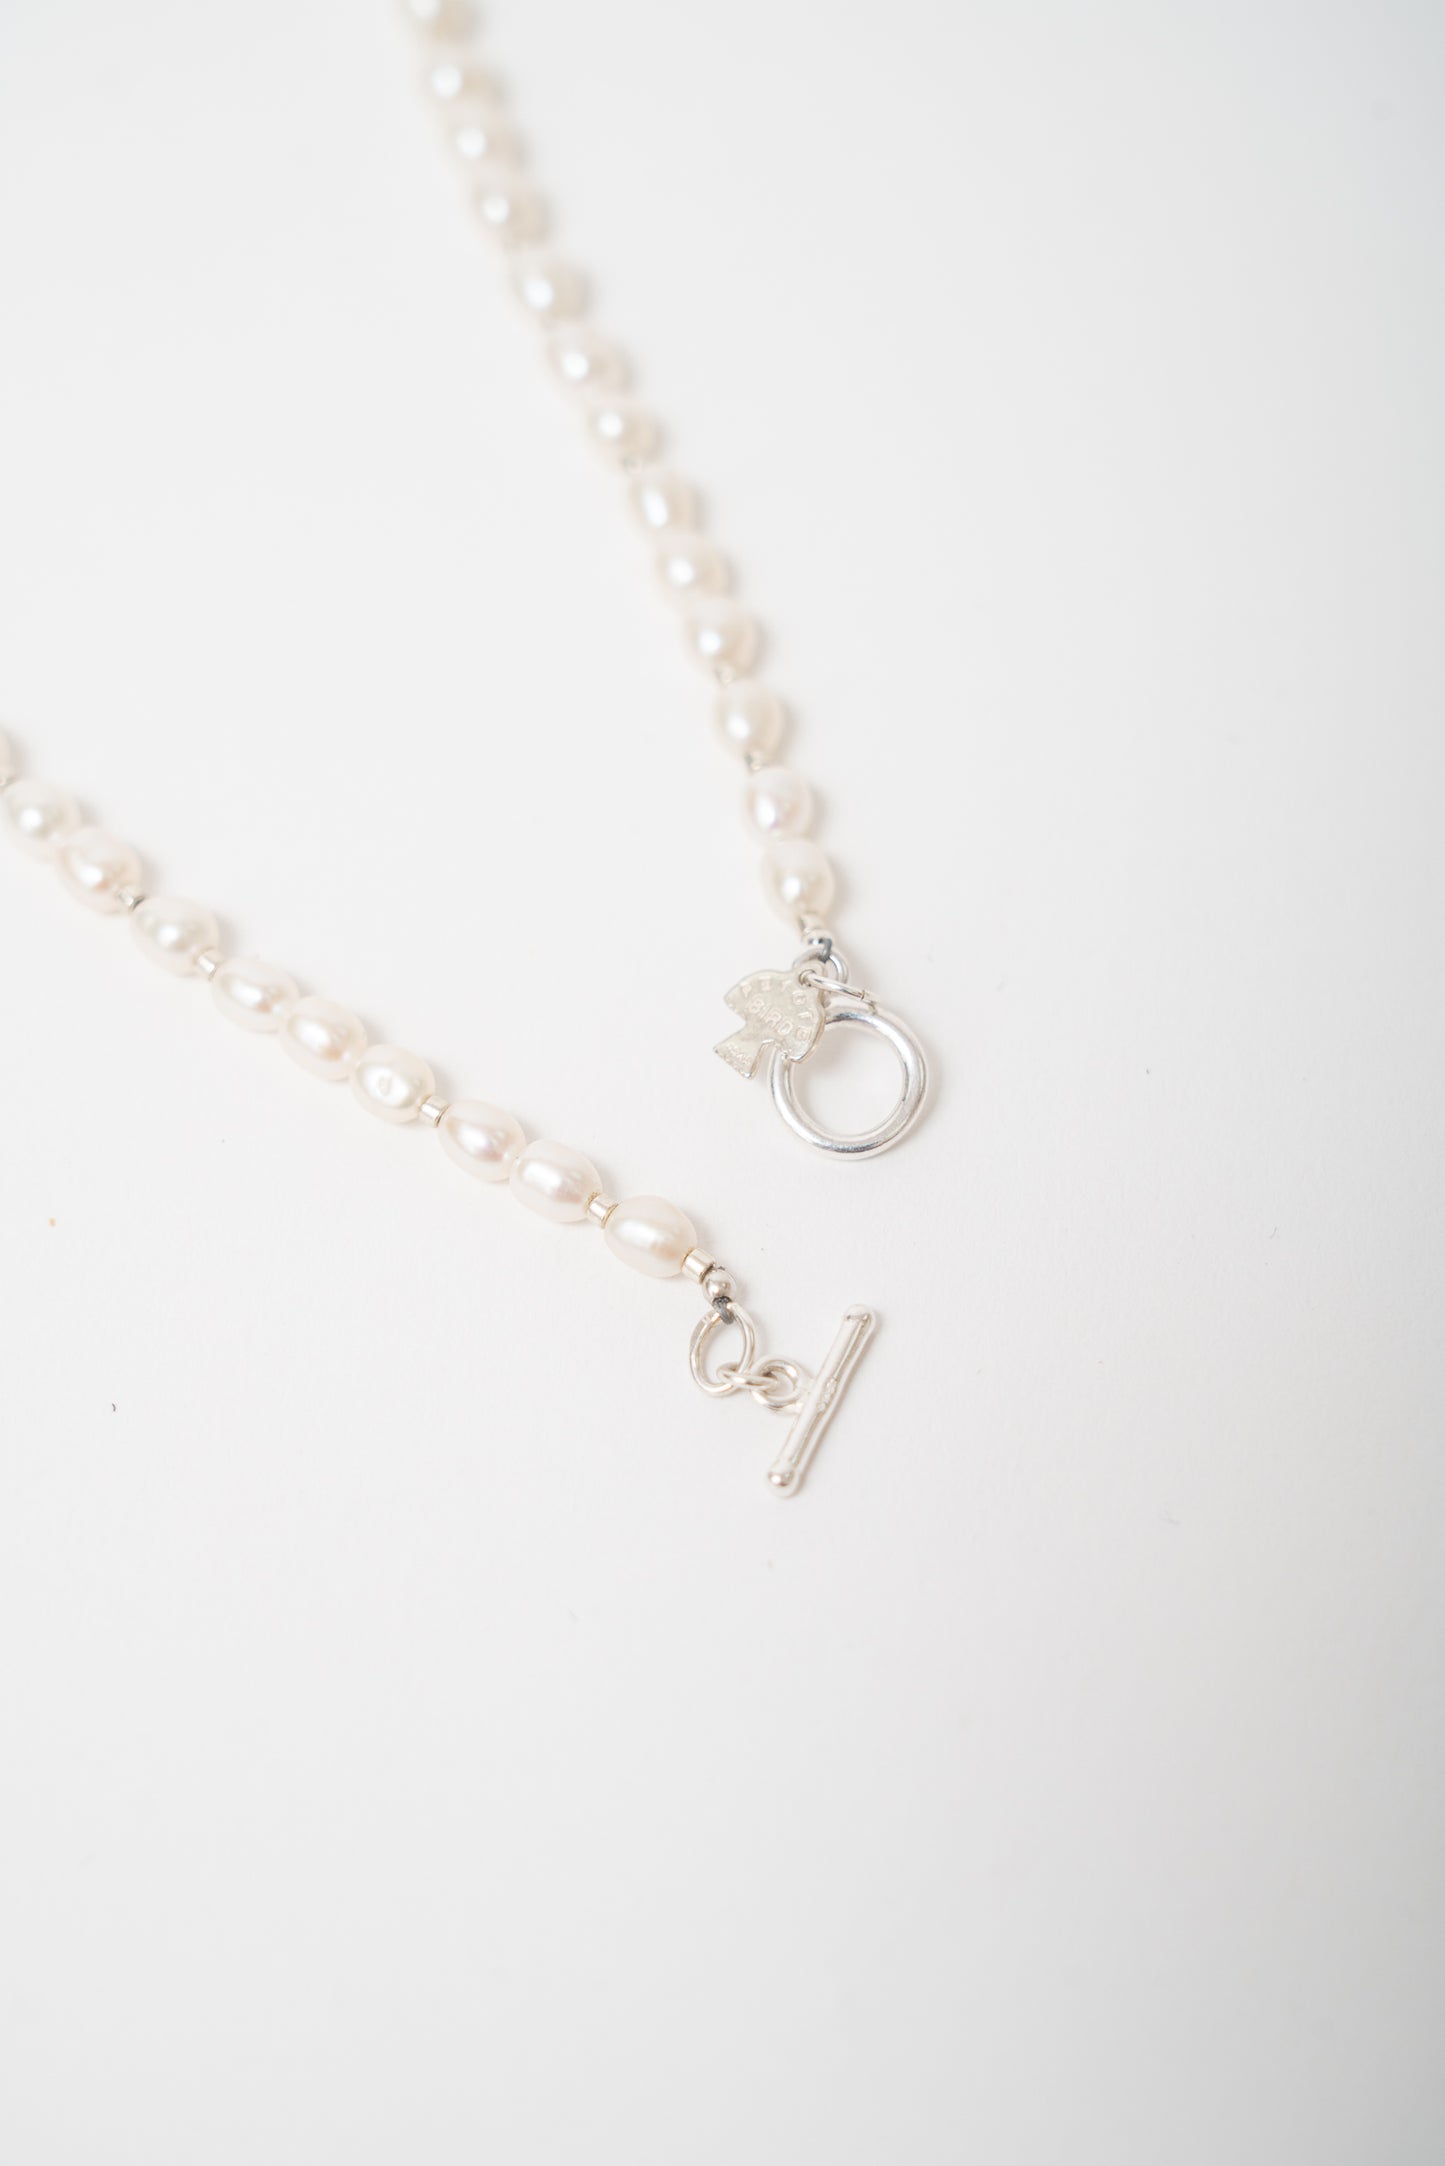 Freshwater Pearl + Garnet Necklace 18"